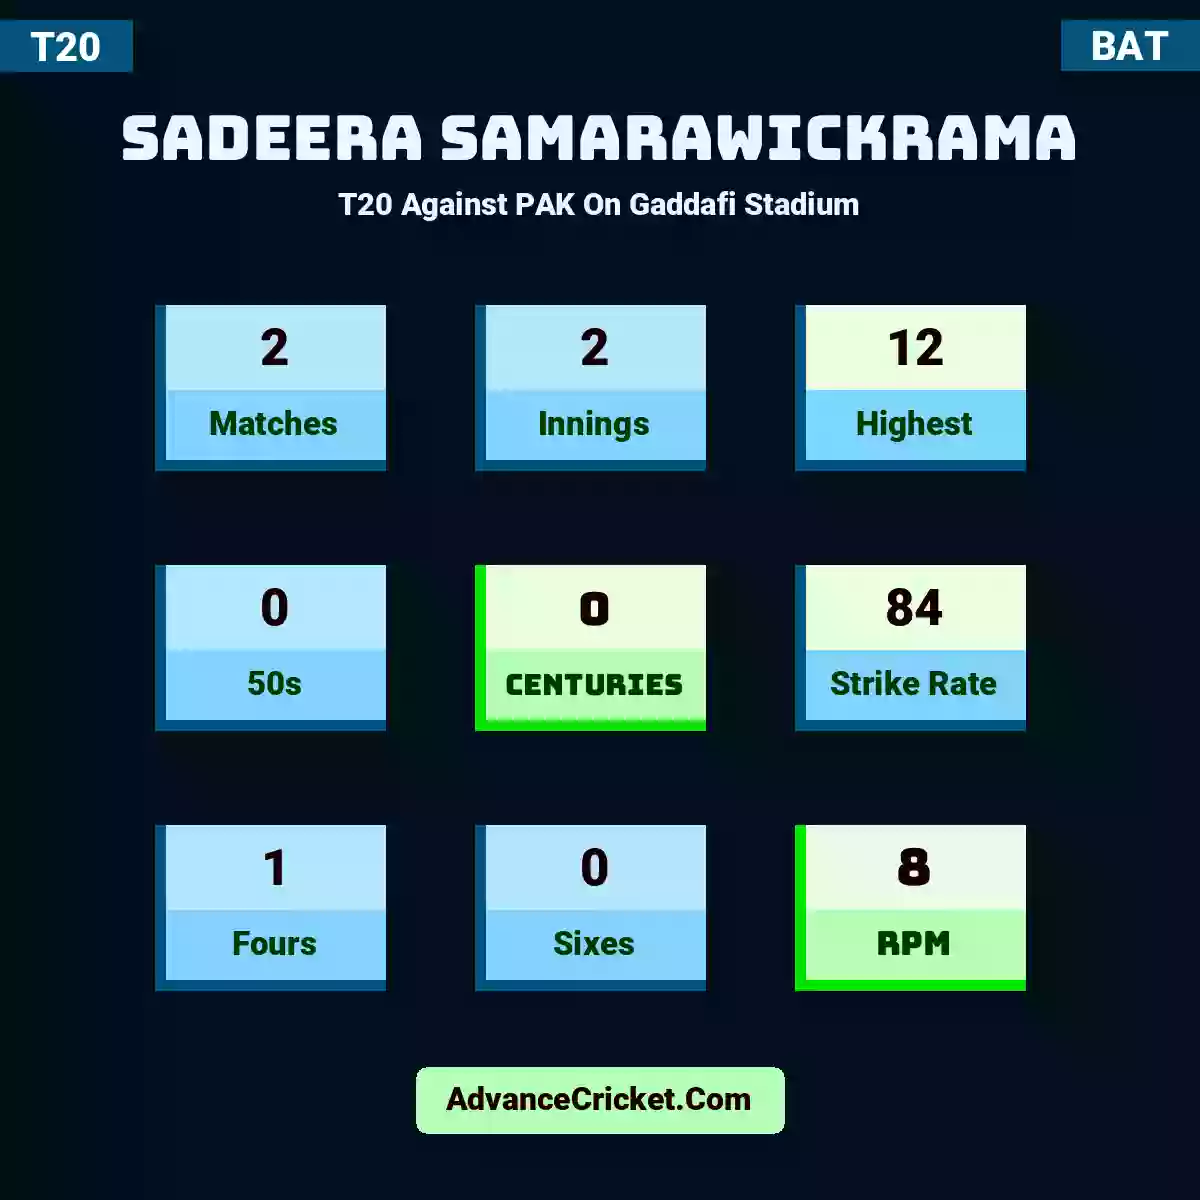 Sadeera Samarawickrama T20  Against PAK On Gaddafi Stadium, Sadeera Samarawickrama played 2 matches, scored 12 runs as highest, 0 half-centuries, and 0 centuries, with a strike rate of 84. S.Samarawickrama hit 1 fours and 0 sixes, with an RPM of 8.